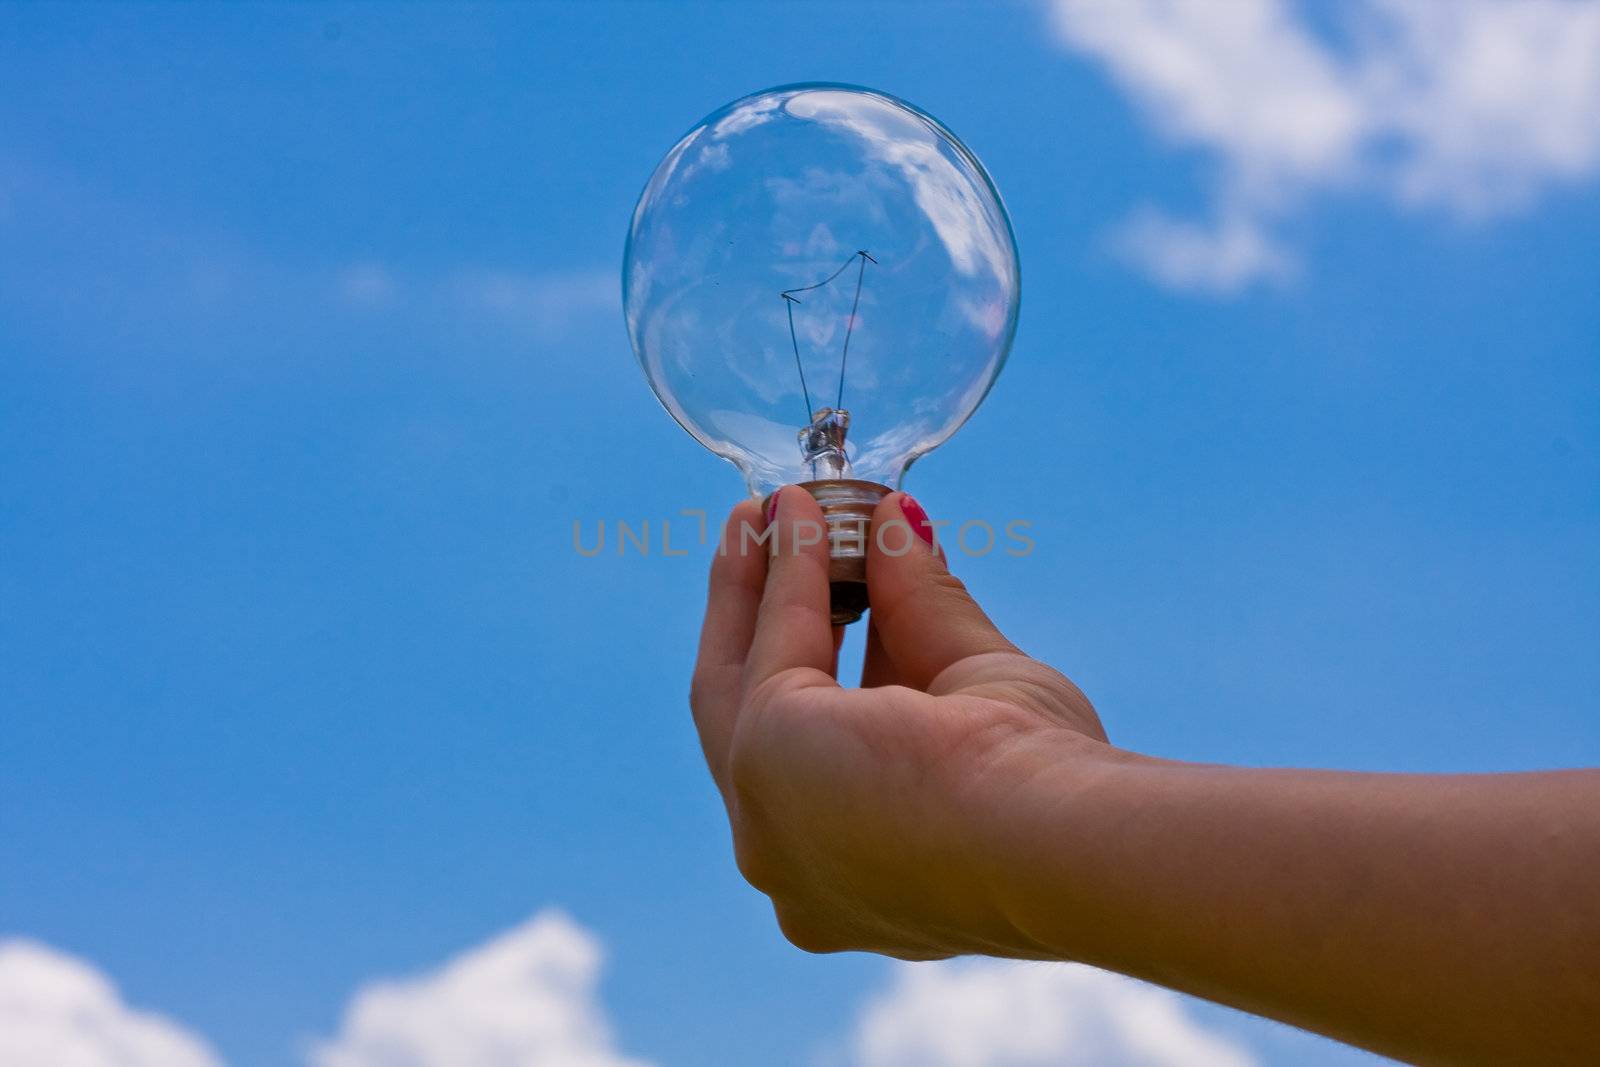 female teen holding a light bulb up with a cloudy blue sky